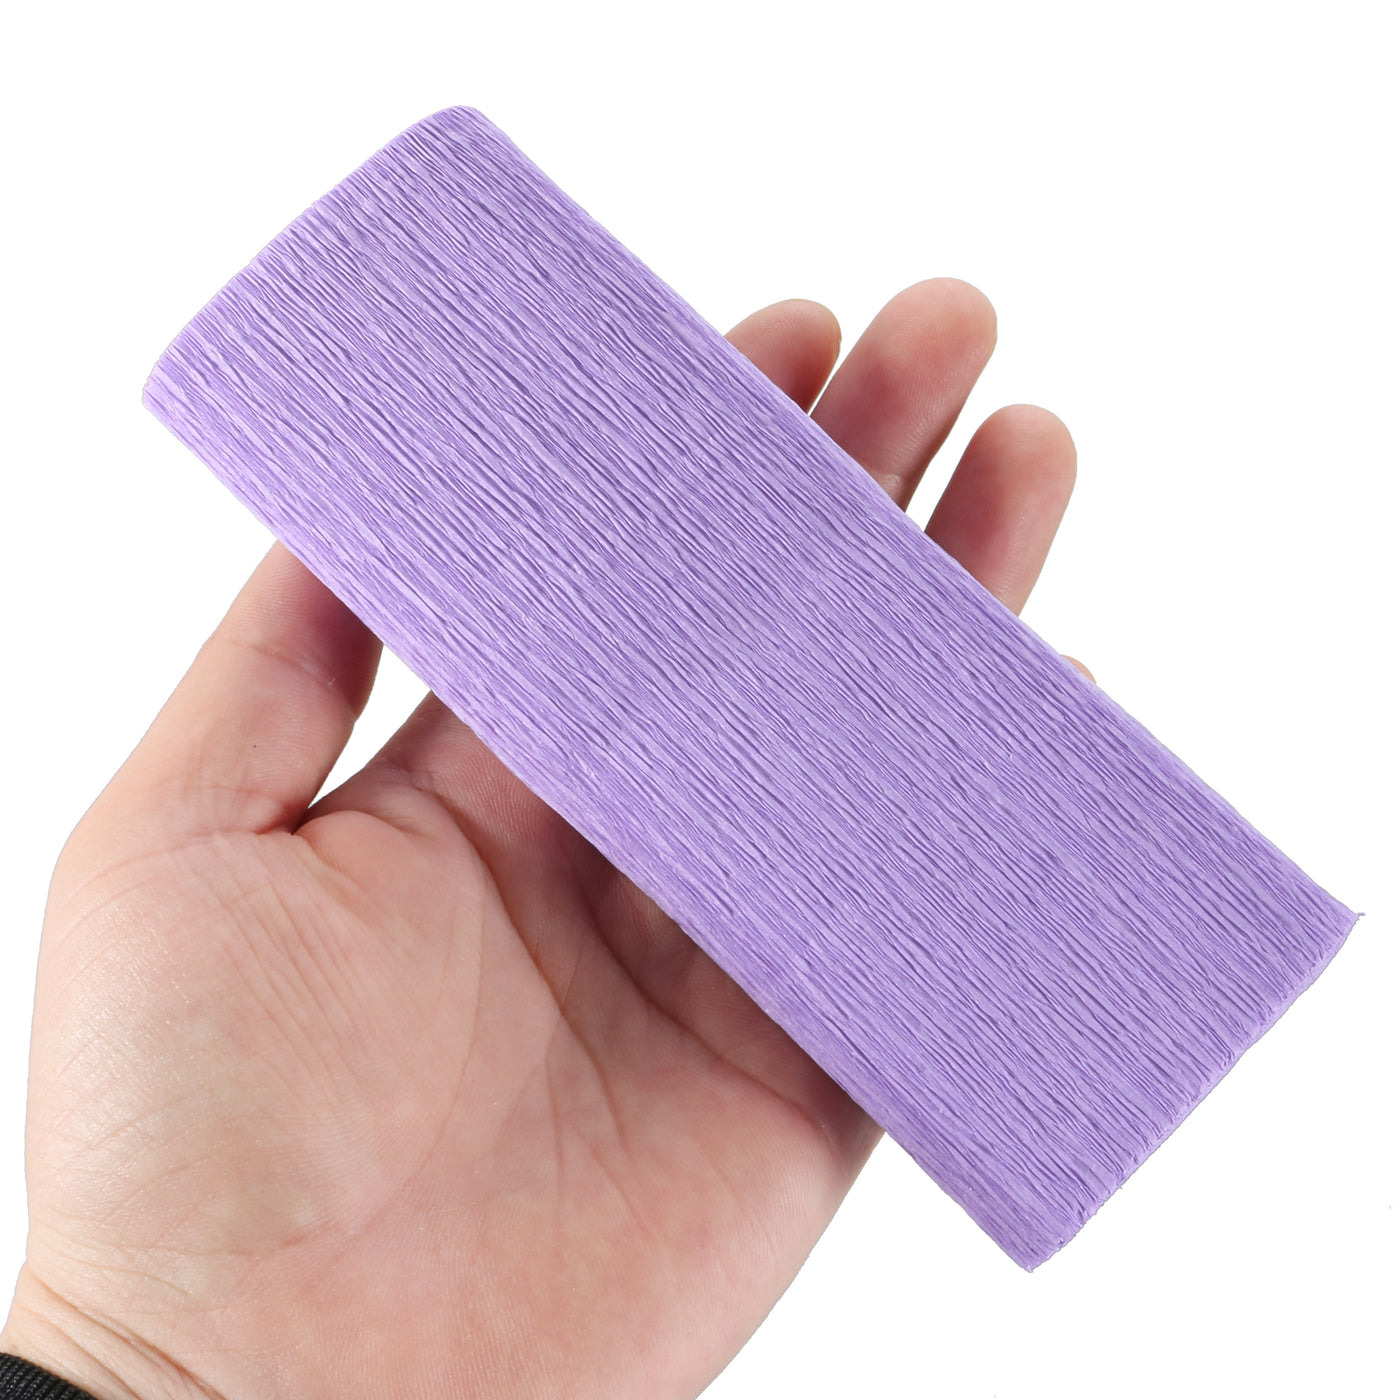 Harfington Crepe Paper Roll Crepe Paper Decoration 8.2ft Long 5.9 Inch Wide, Light Purple